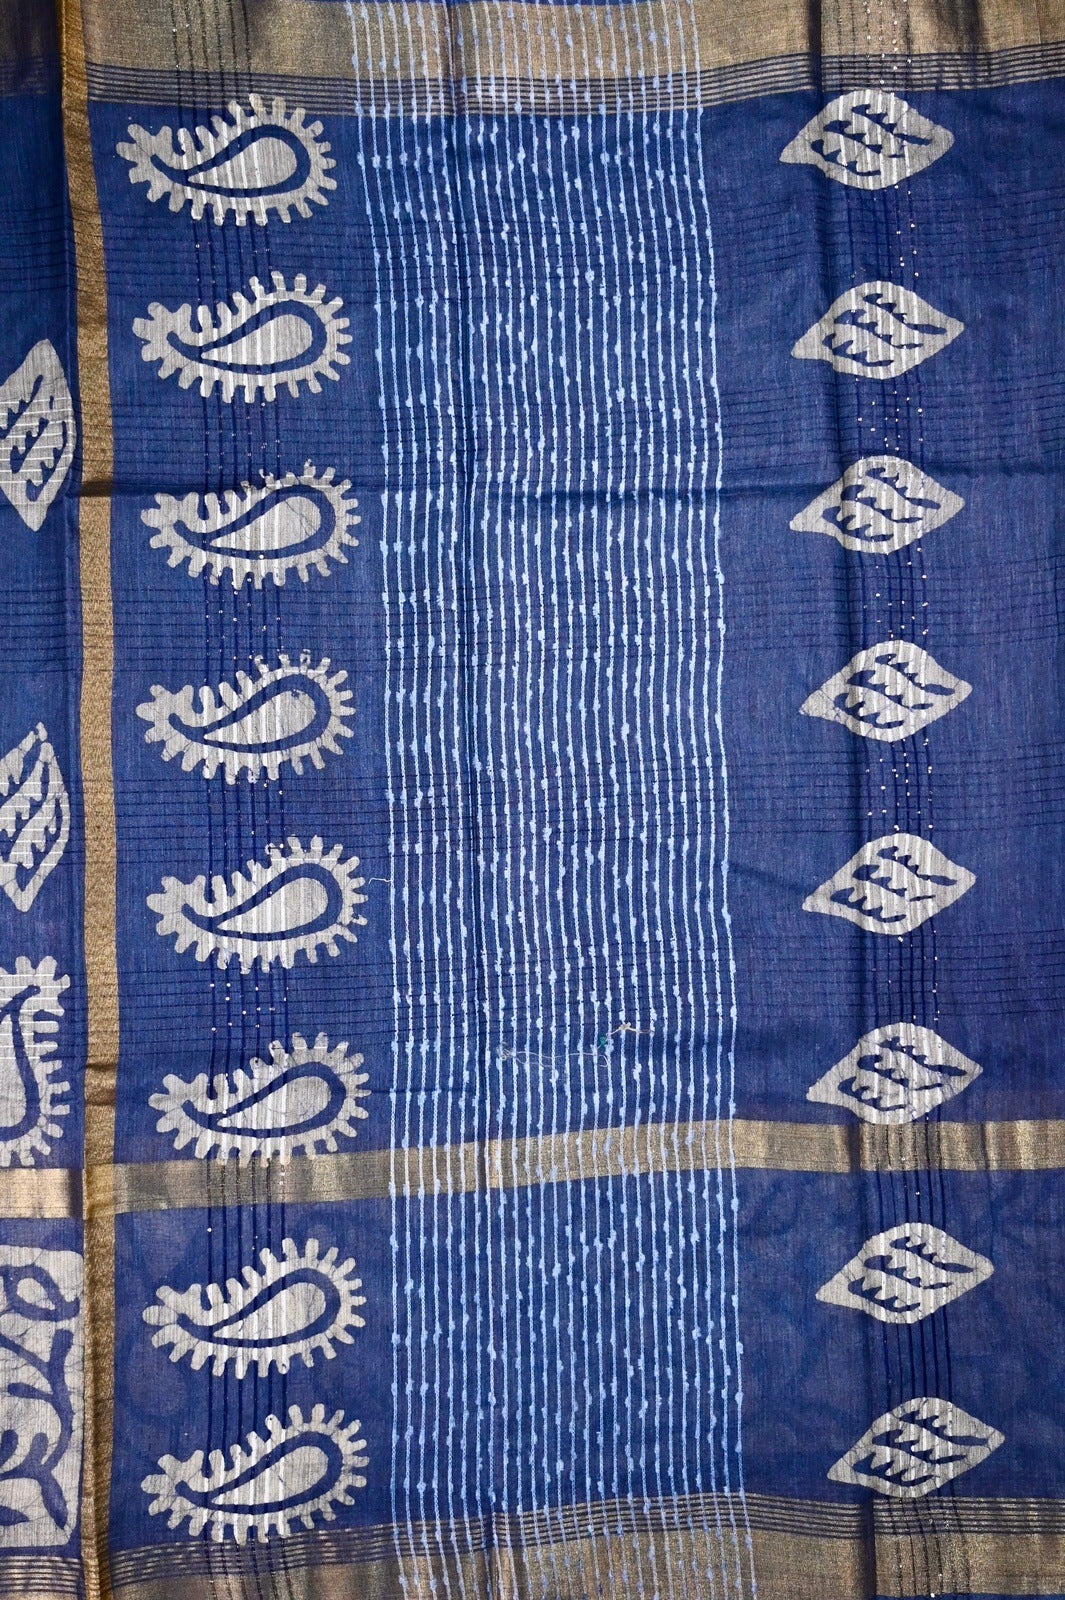 Jute tussar fancy saree brown color with allover batik prints, big border with zari, pallu and plain blouse